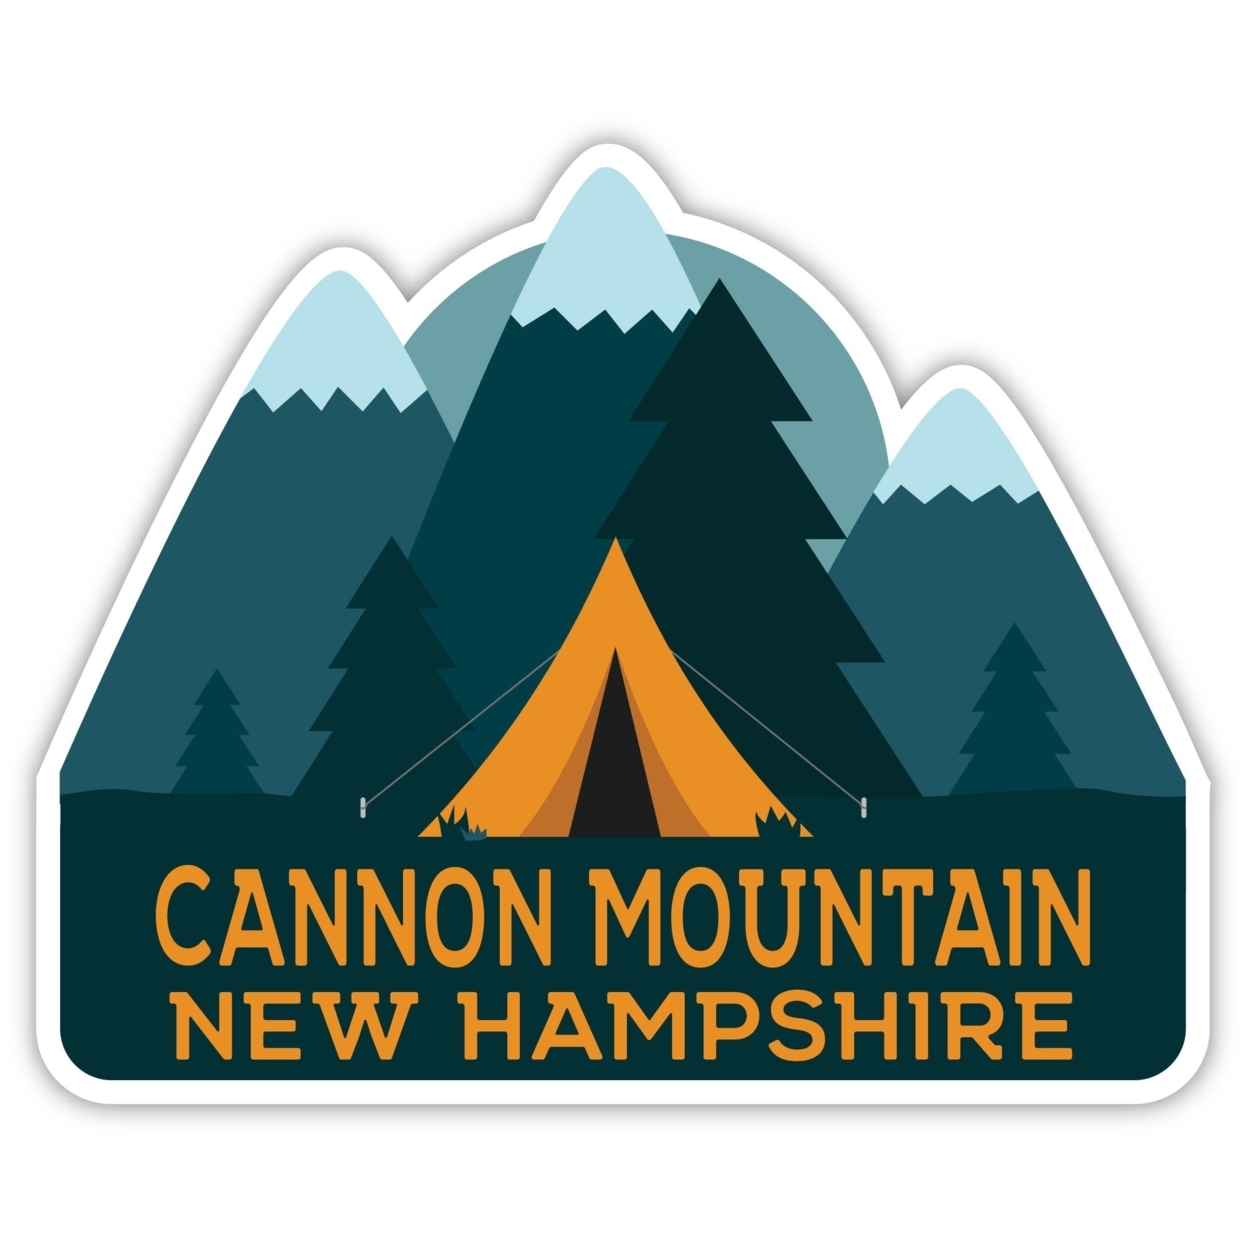 Cannon Mountain New Hampshire Souvenir Decorative Stickers (Choose Theme And Size) - Single Unit, 2-Inch, Tent